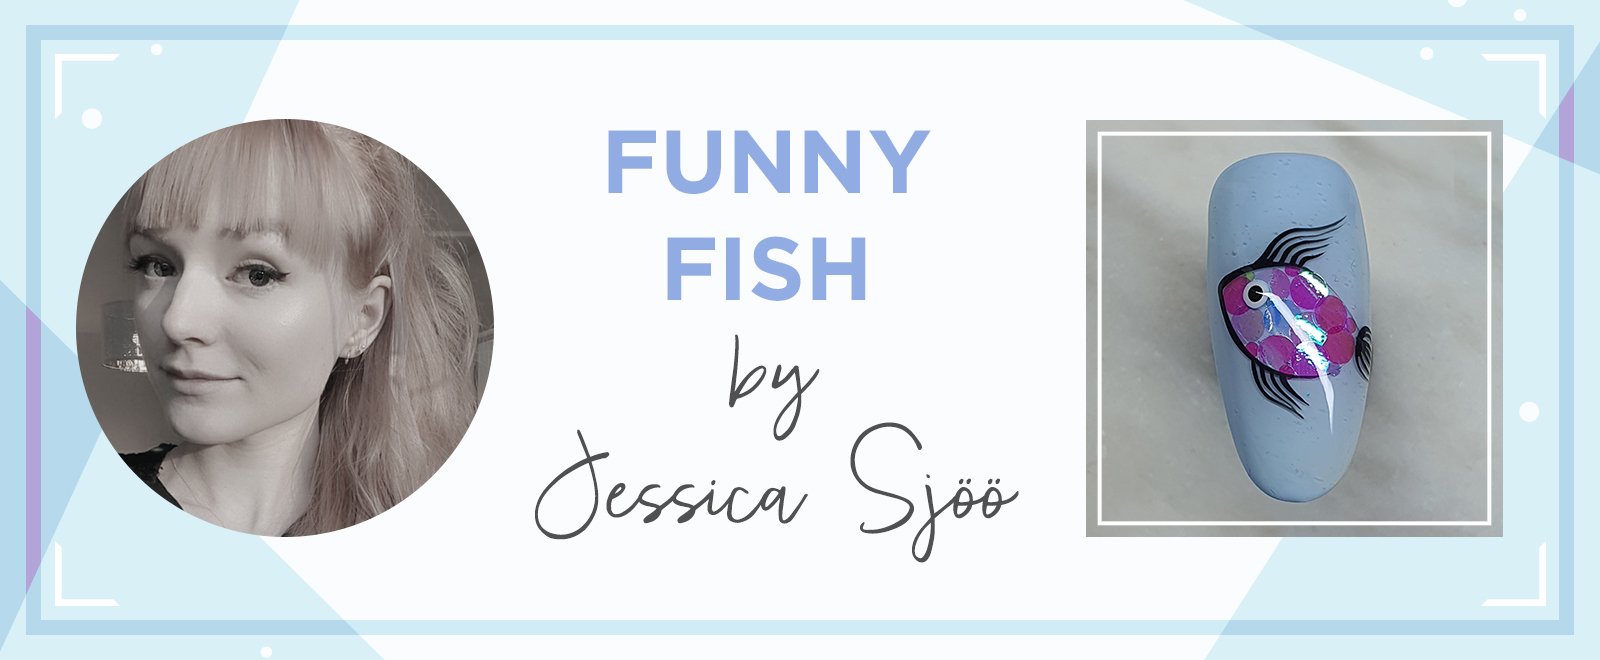 SBS_header_template_1600x660_funny-fish_Jessica-Sjöö